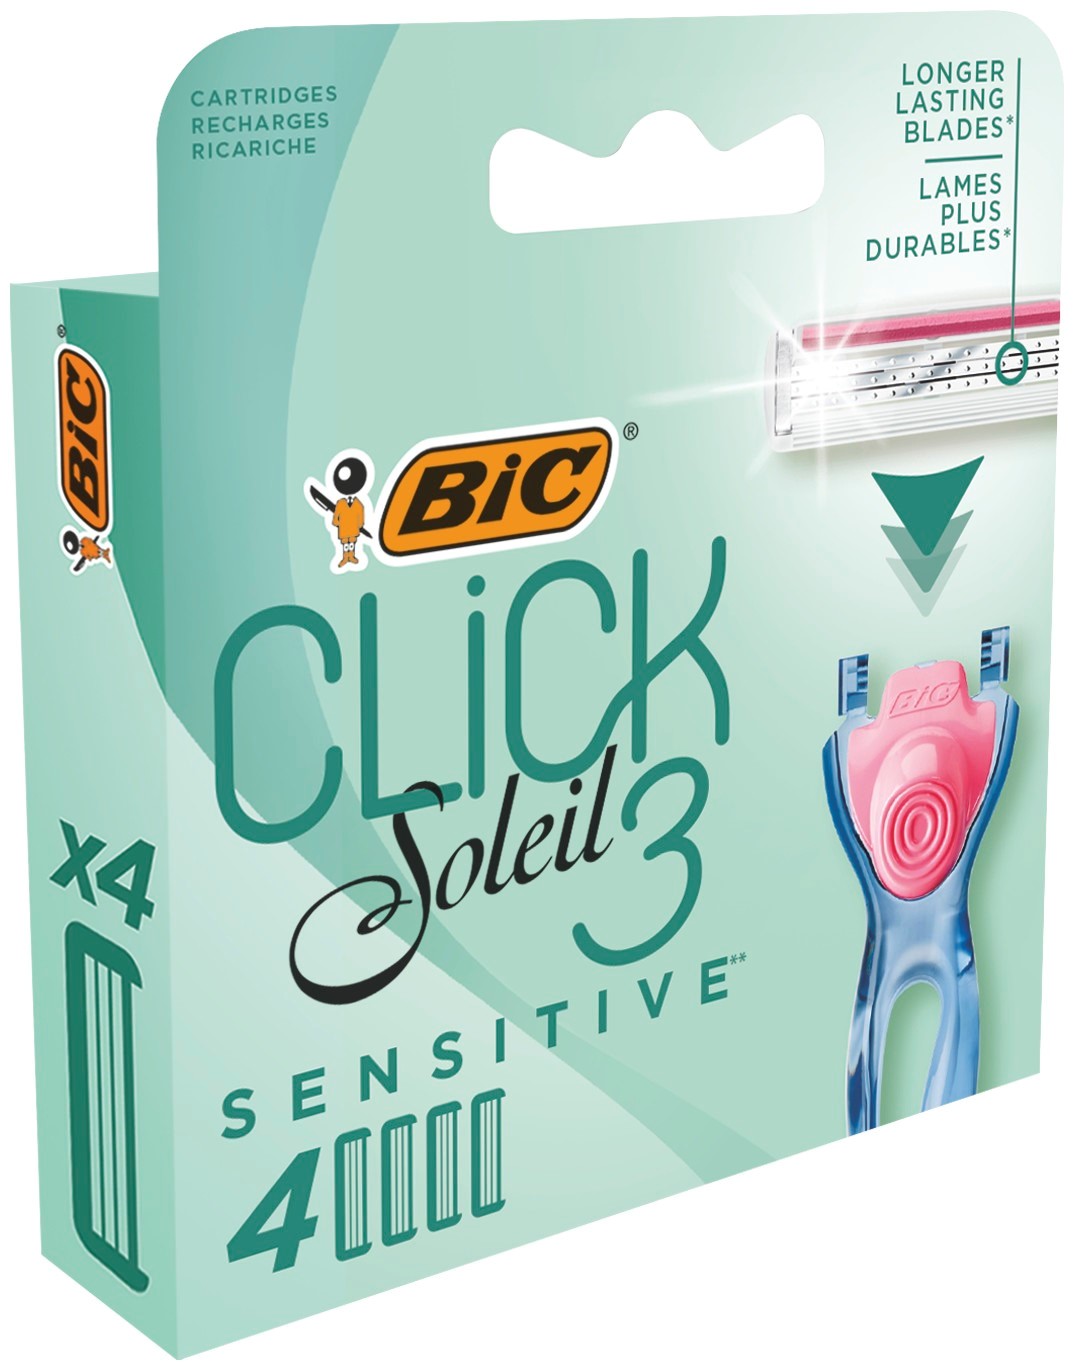 Bic Click Soleil 3 Sensitive Navulling 4ST kopen